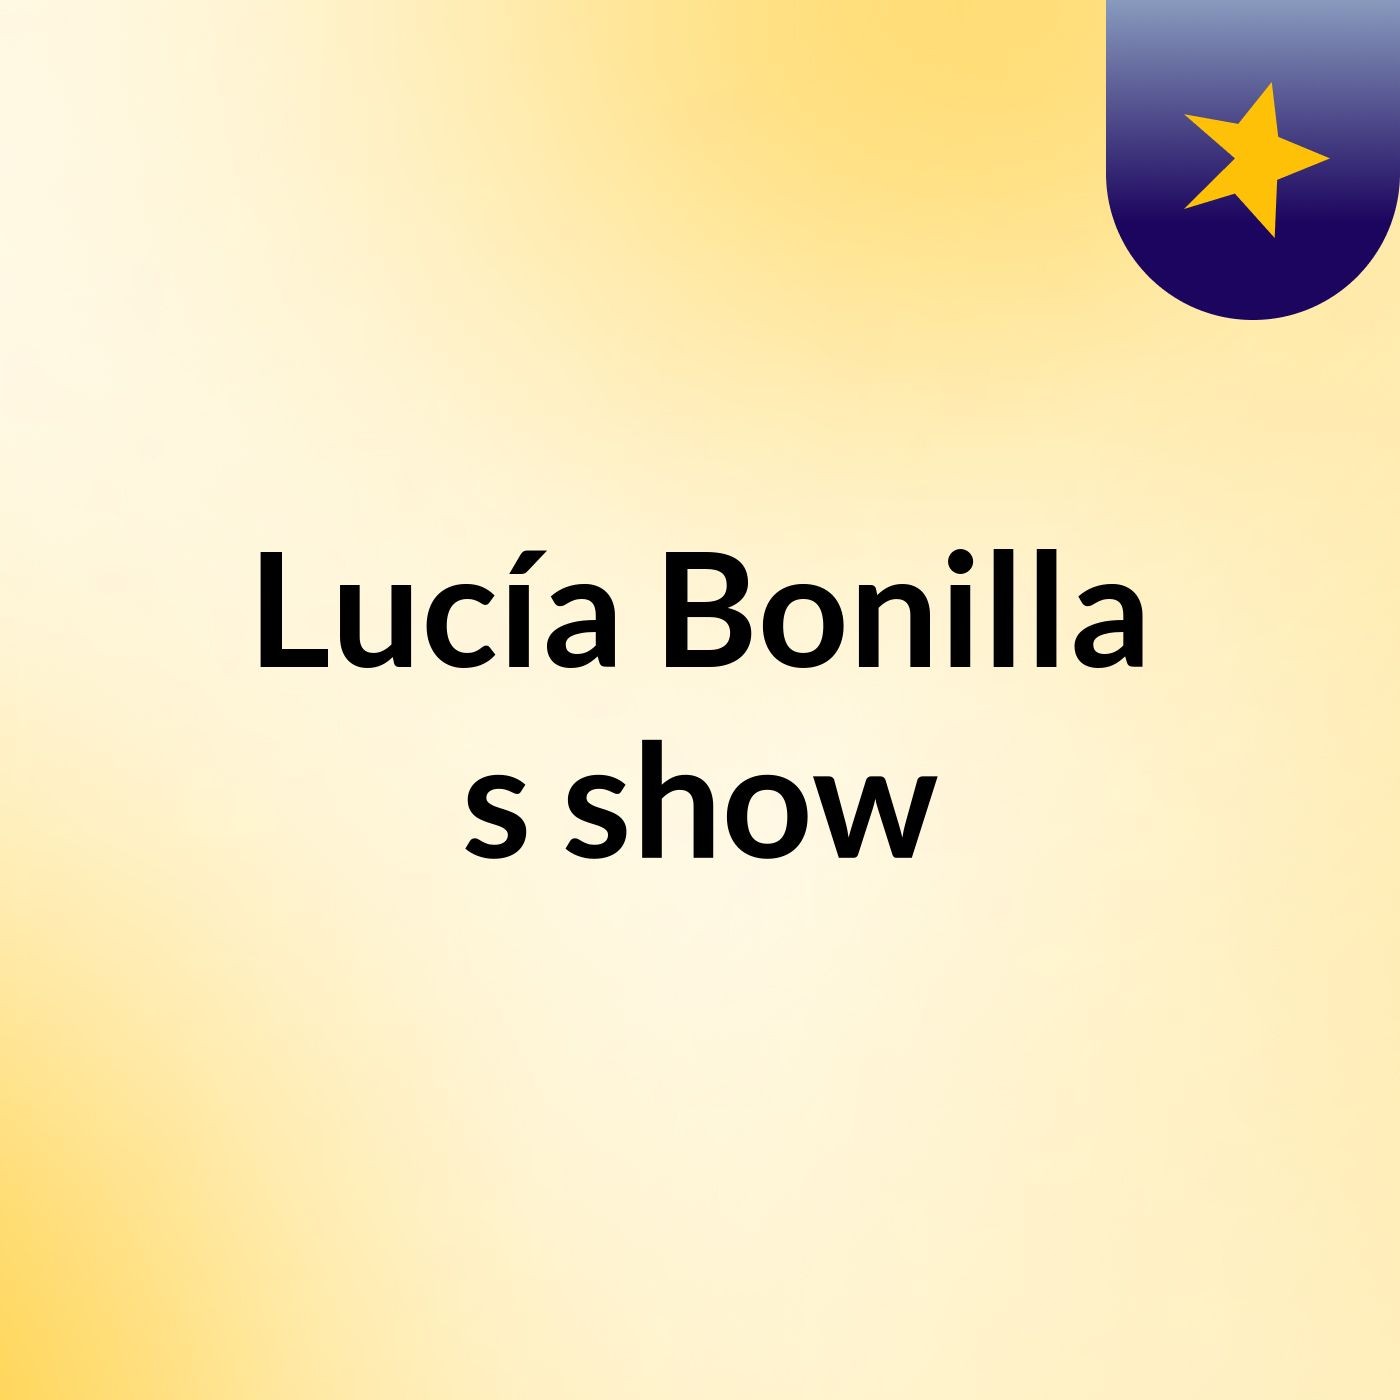 Lucía Bonilla's show